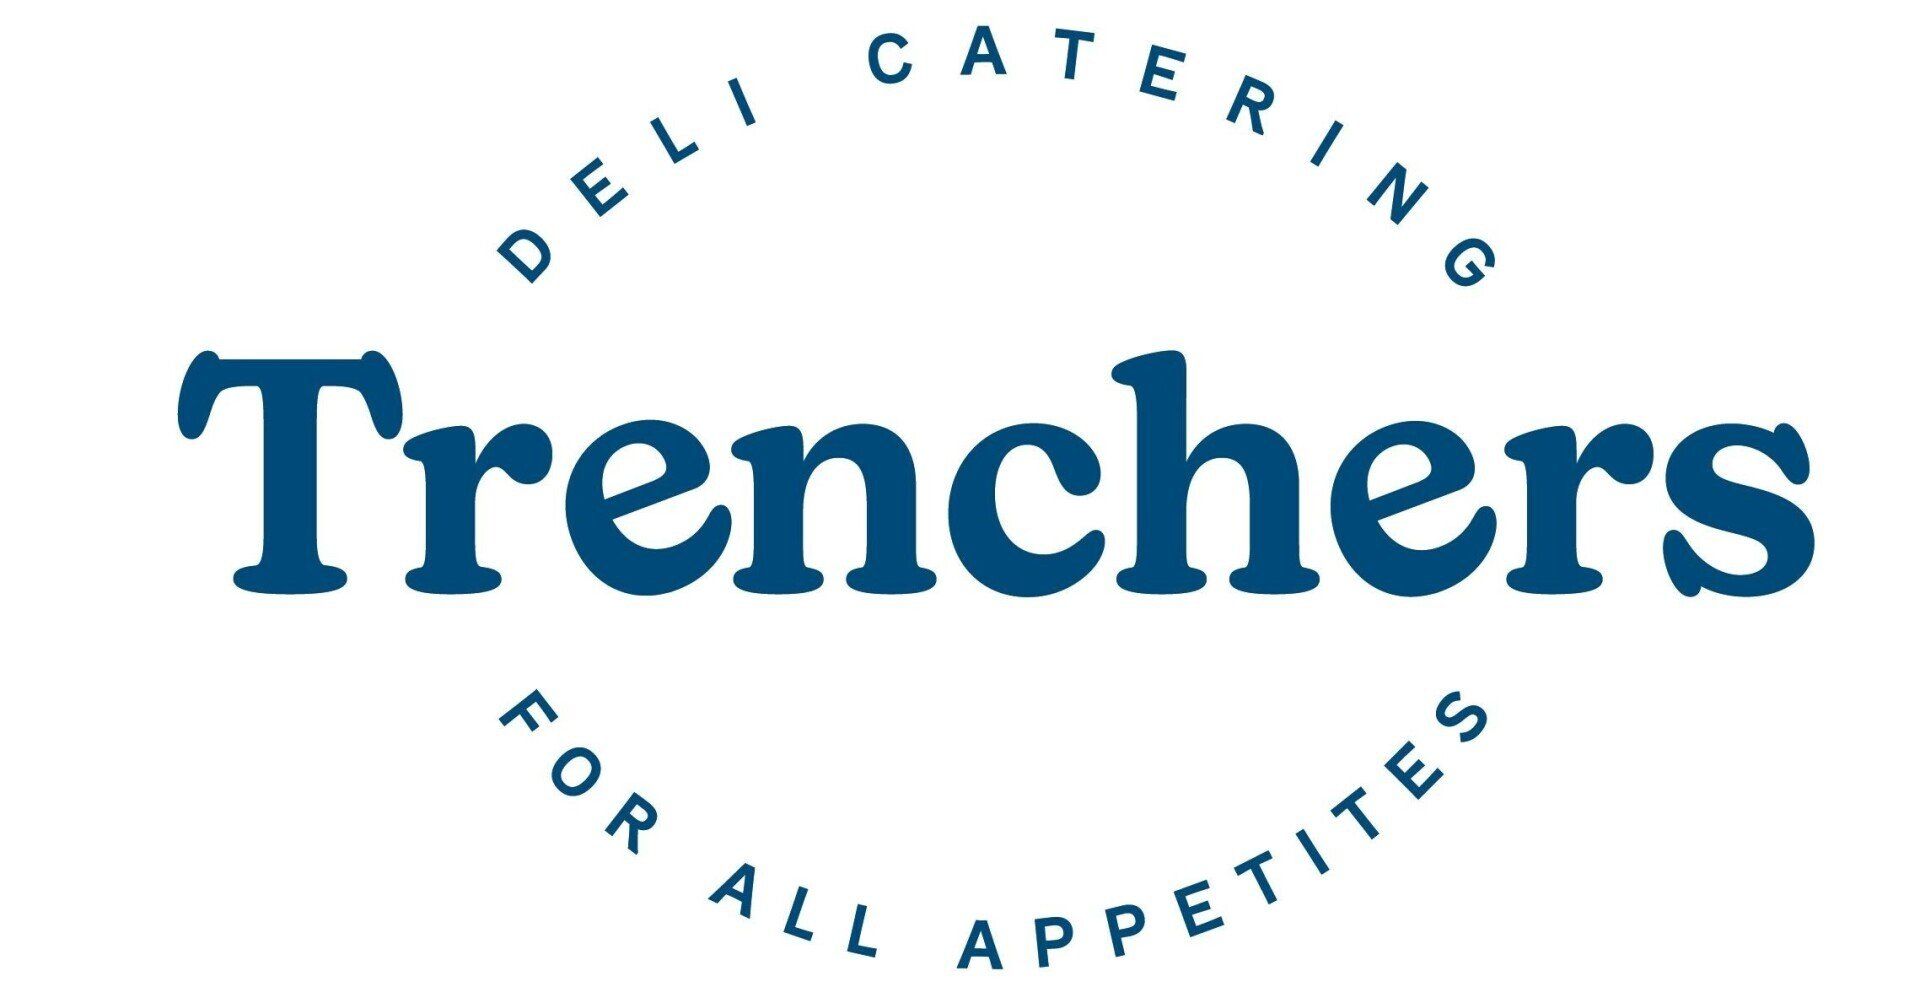 Trenchers logo